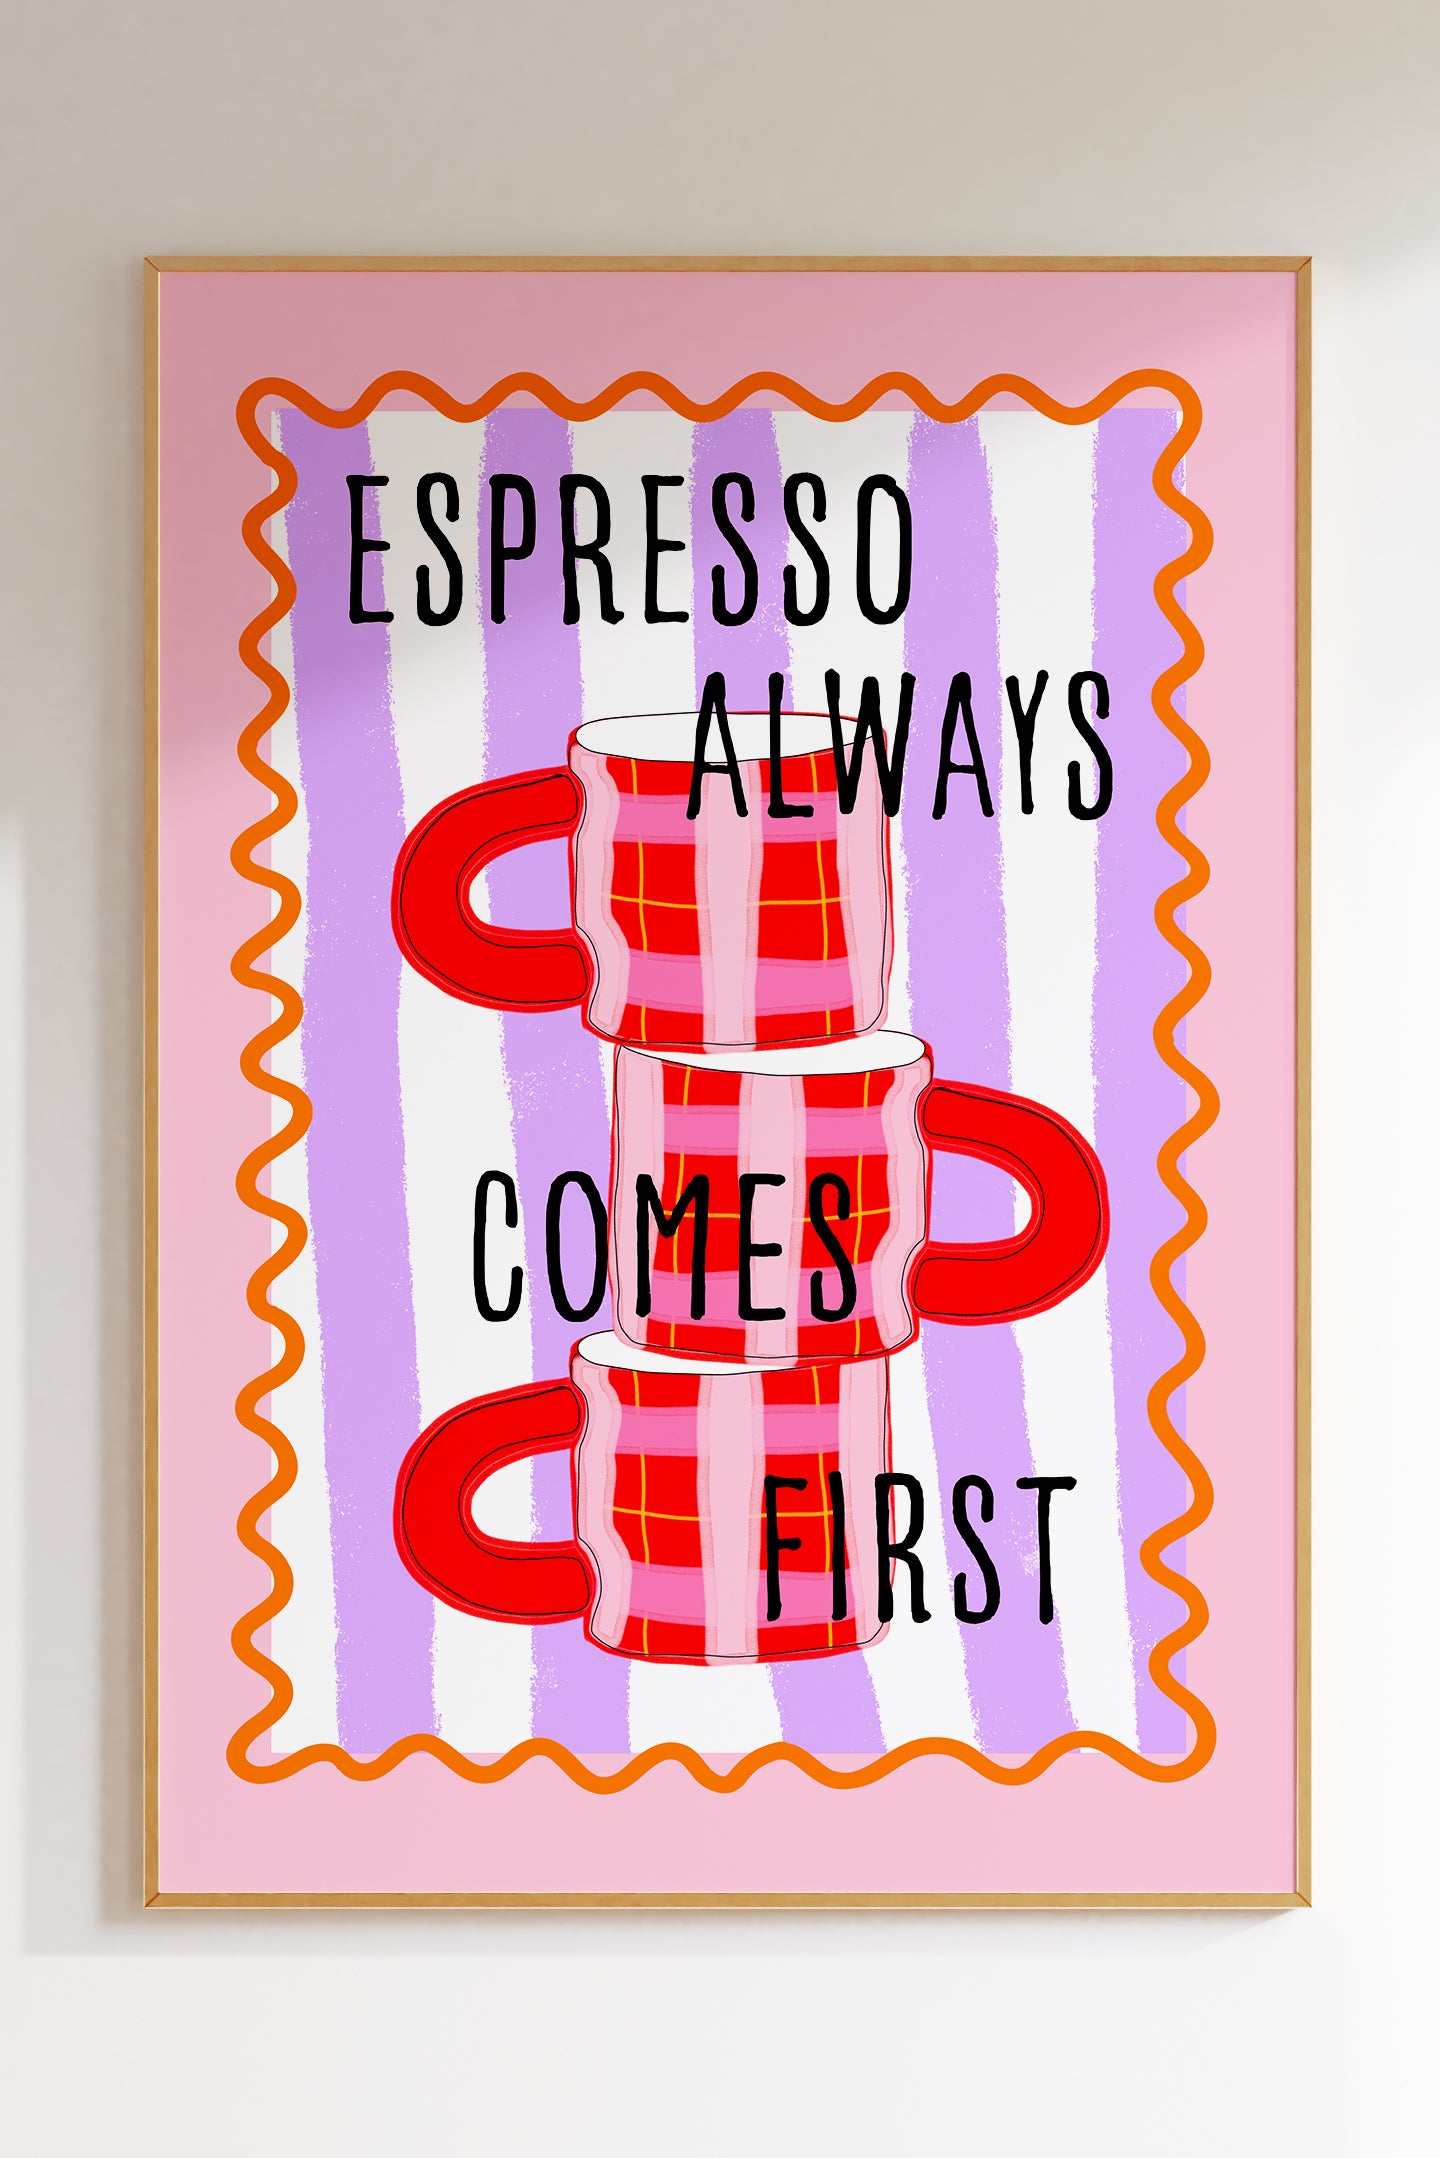 Espresso Always Comes First (FF)